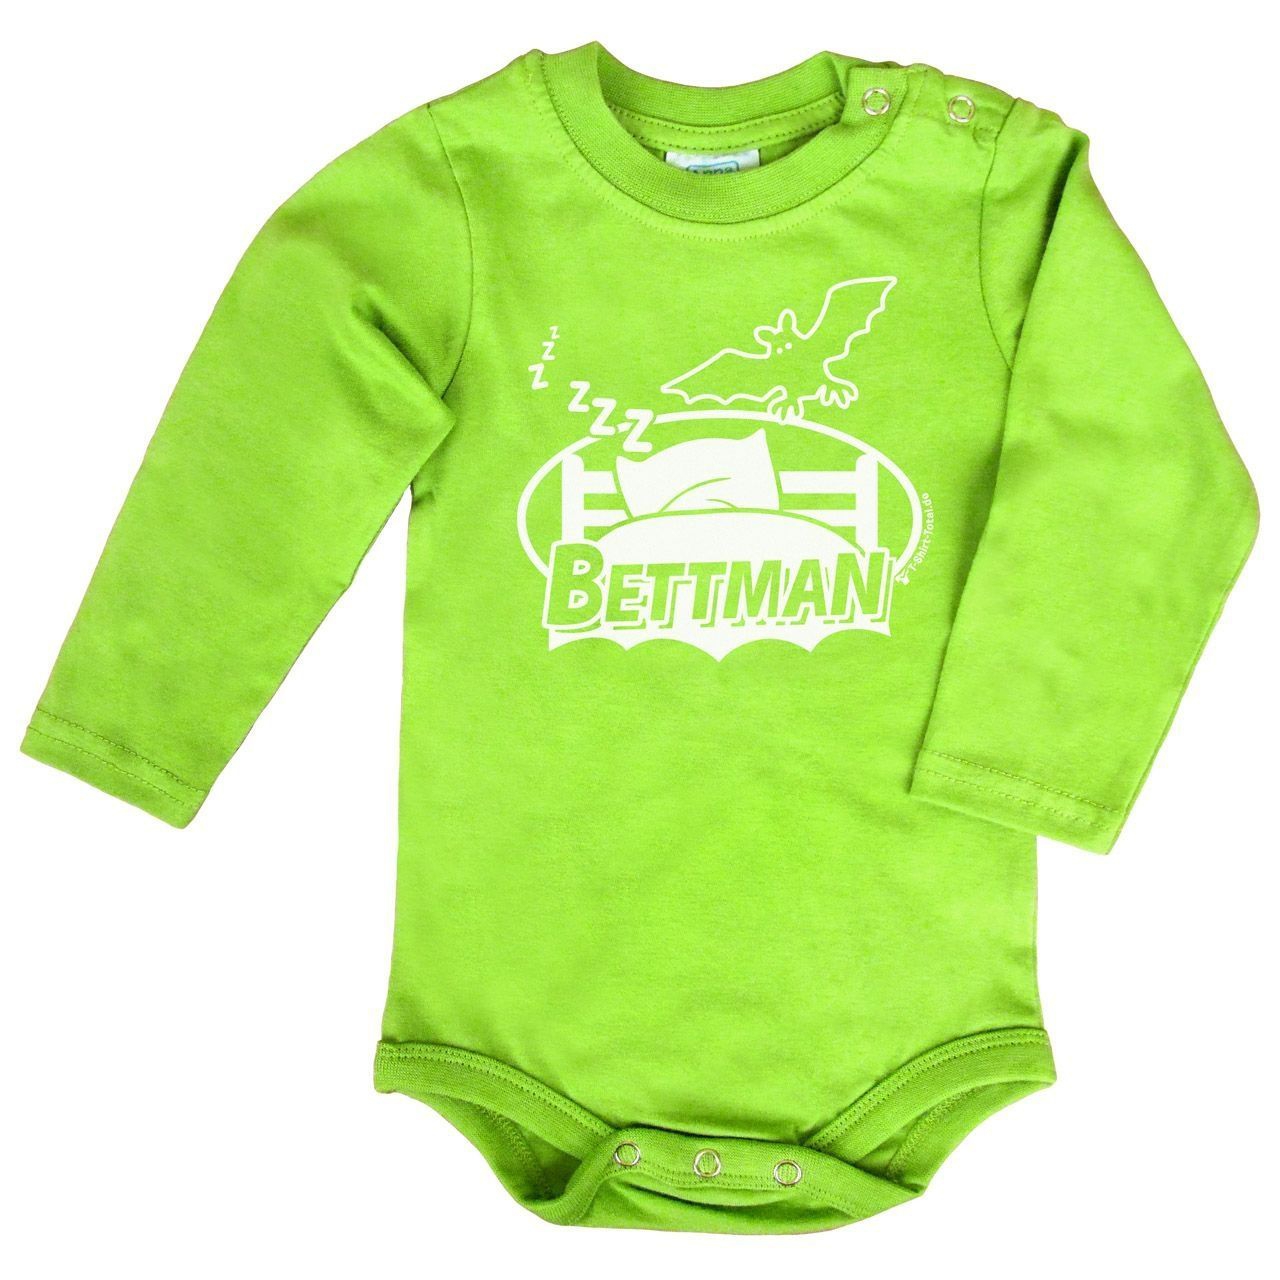 Bettman Baby Body Langarm hellgrün 68 / 74